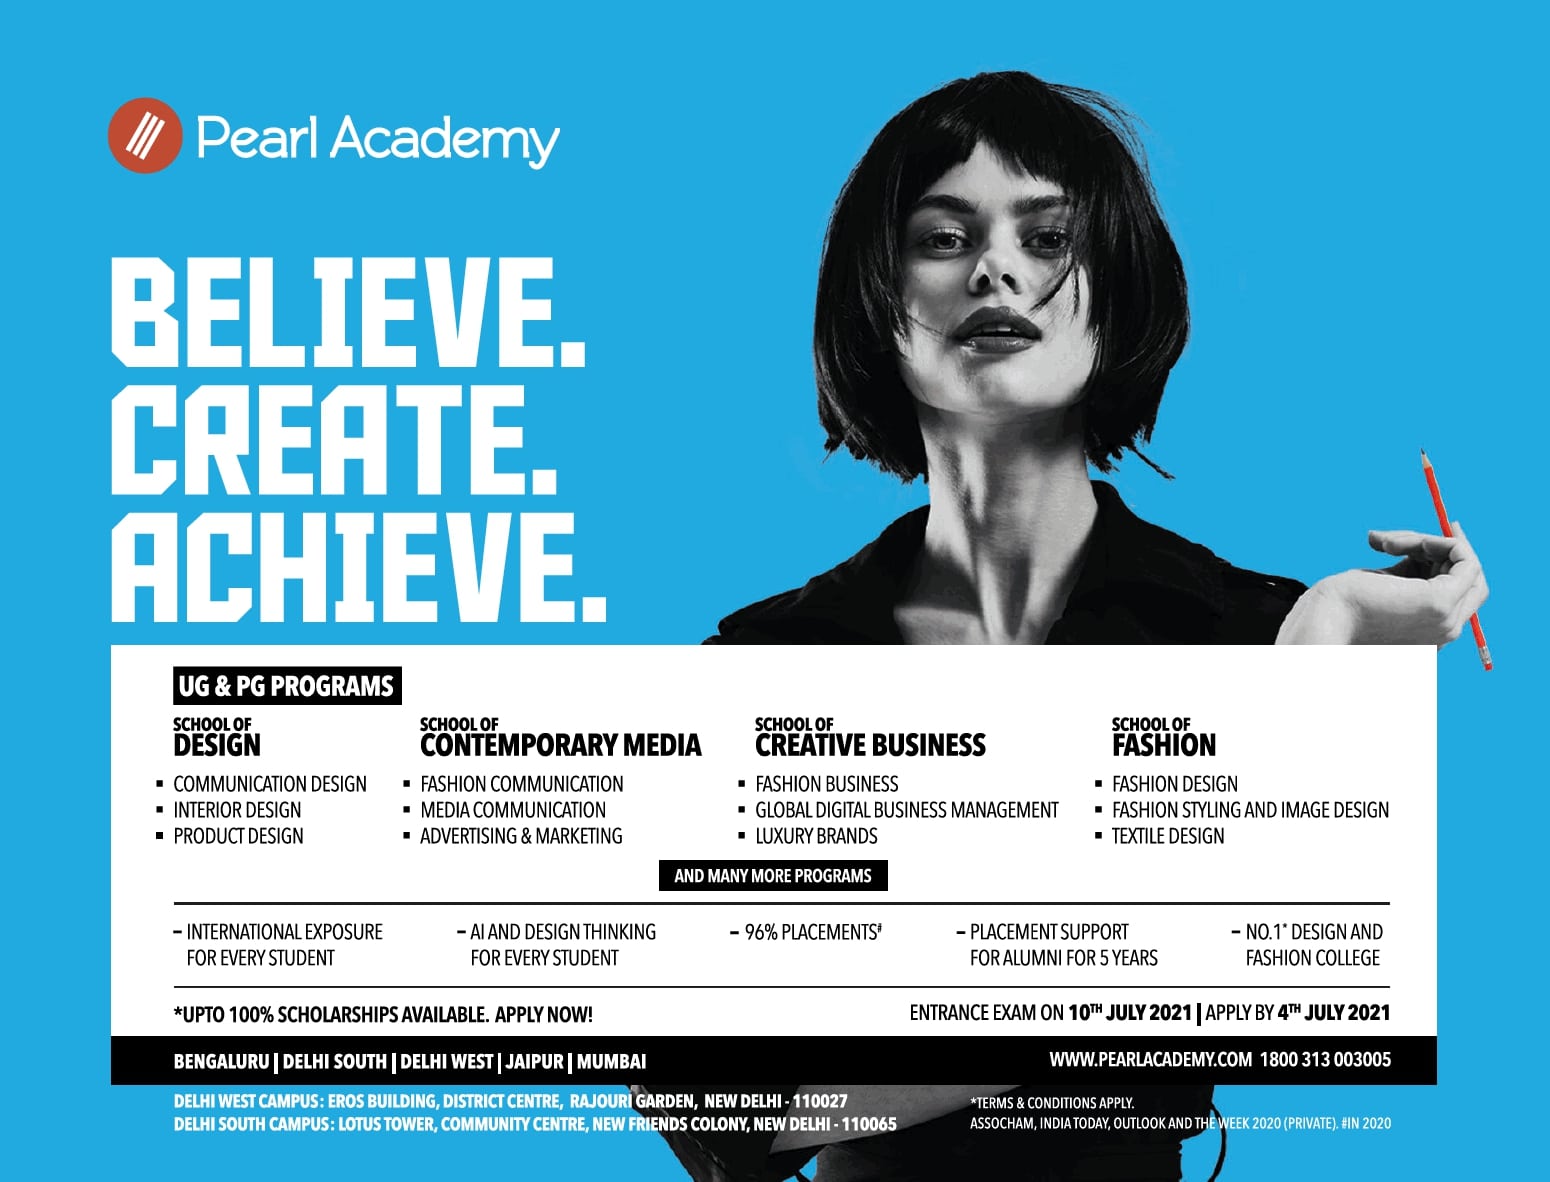 pearl-academy-believe-create-achieve-ad-delhi-times-05-06-2021